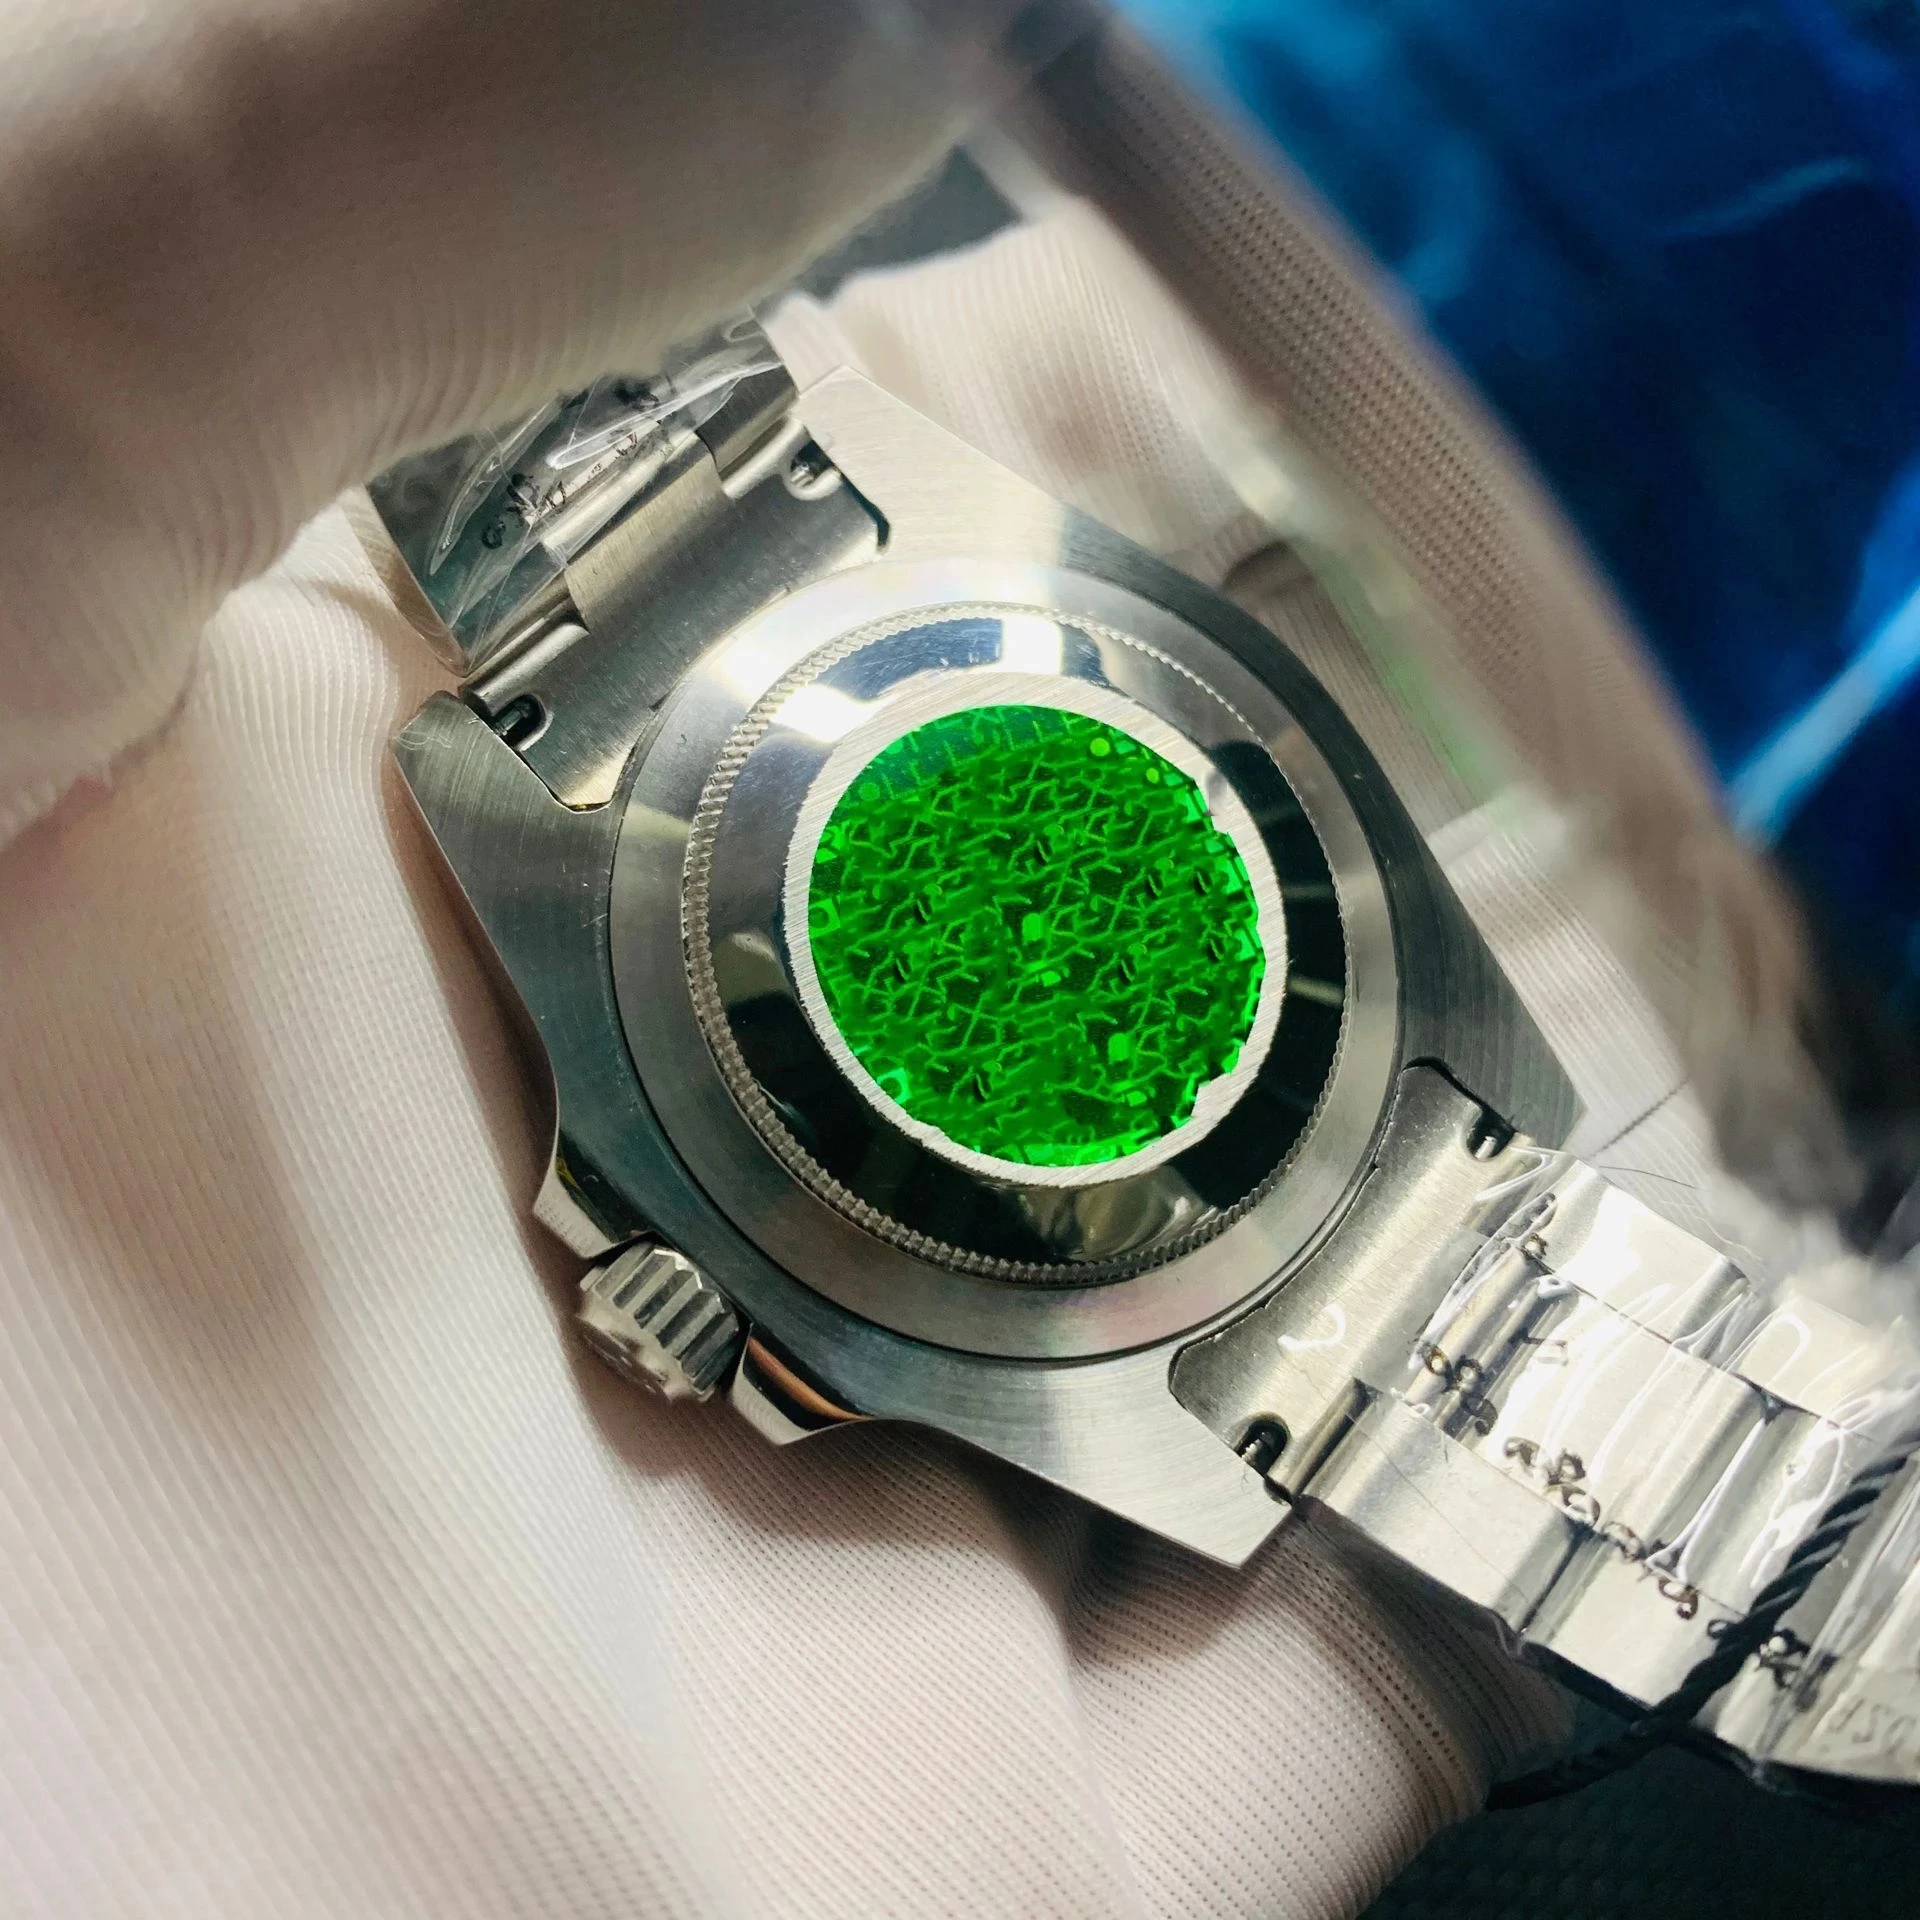 2020 vrh GMT watch moških samodejno U1 tovarne črne keramične plošče safirno steklo, svetlobna iglo zamah šport luksuzni watch AAA 4